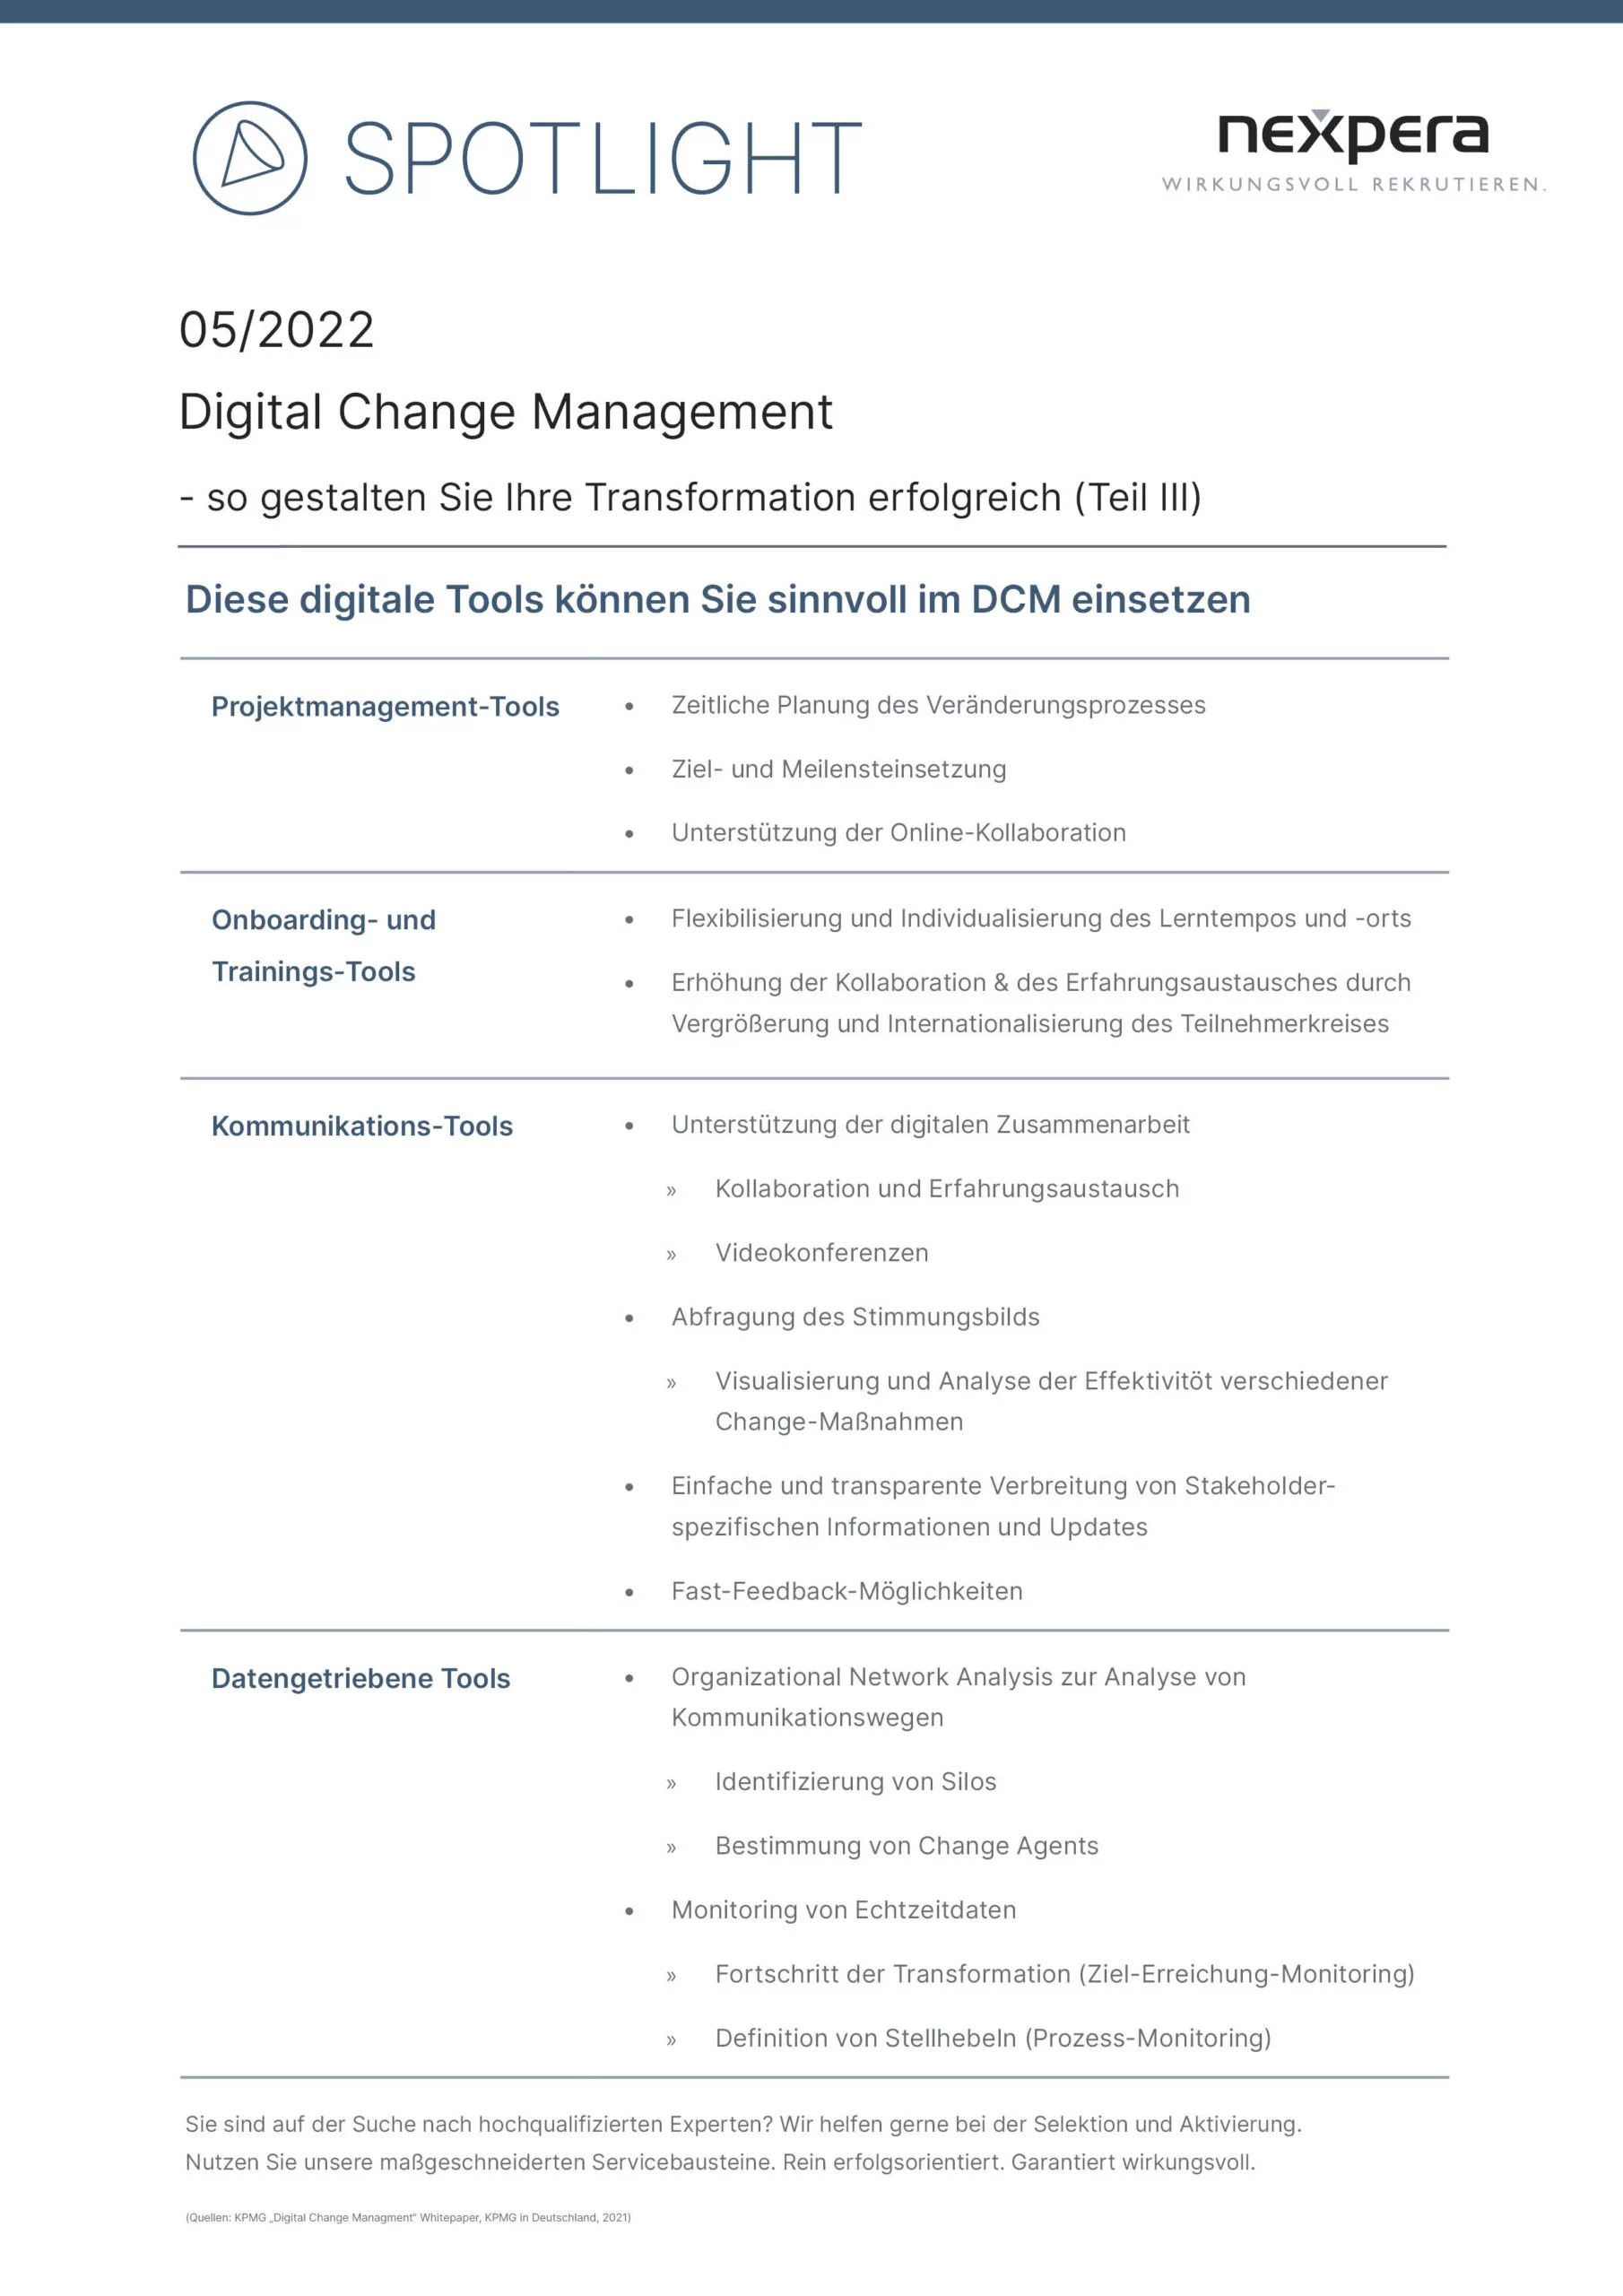 Spotlight Digital Change Management Teil III